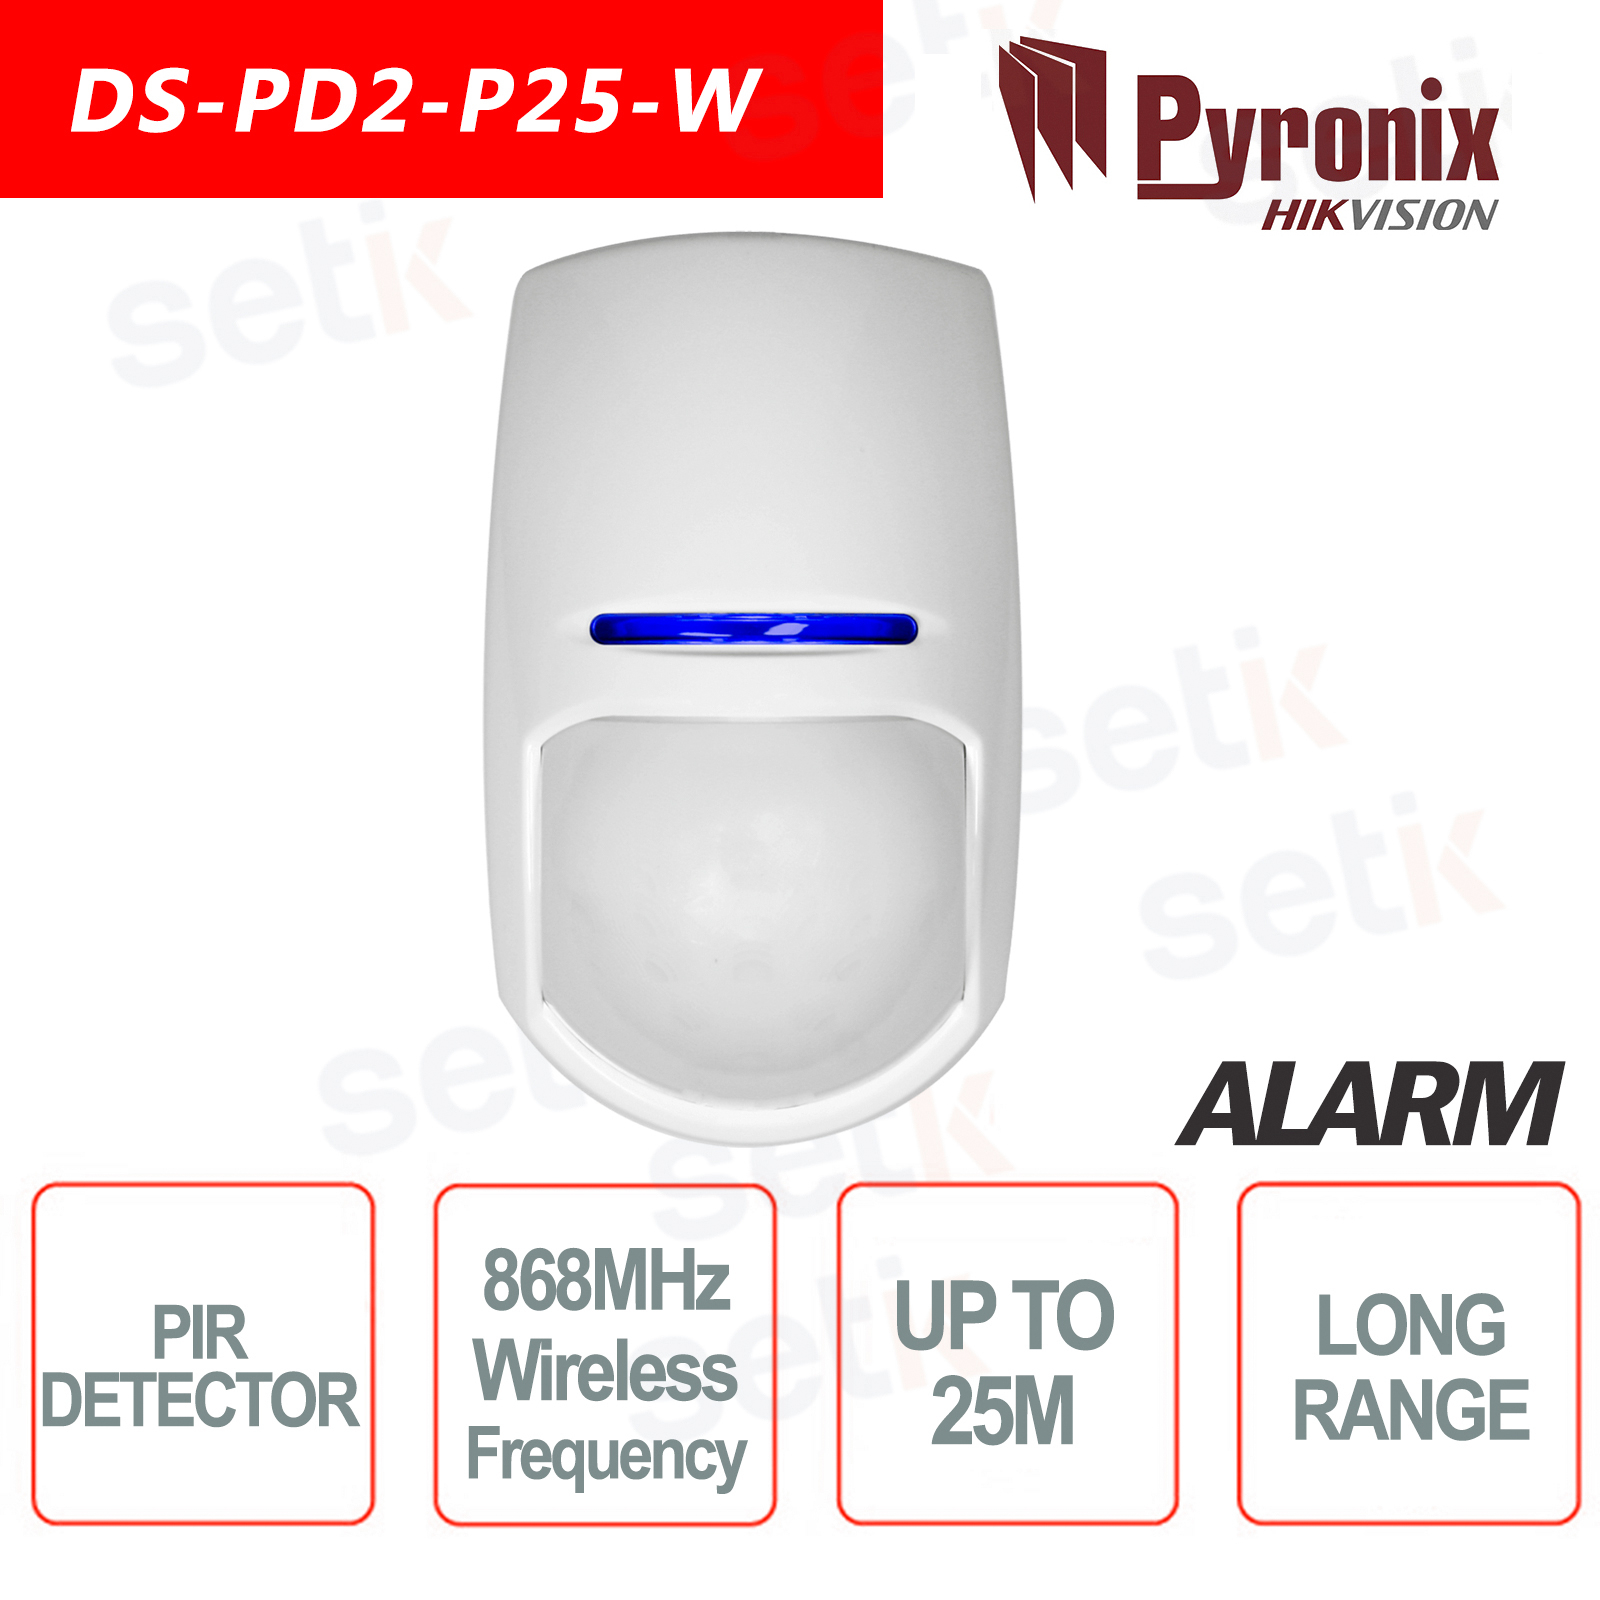 DS-PD2-P25-W - Rilevatore PIR Lunga Portata Wireless 868MHz Hikvision  Pyronix 